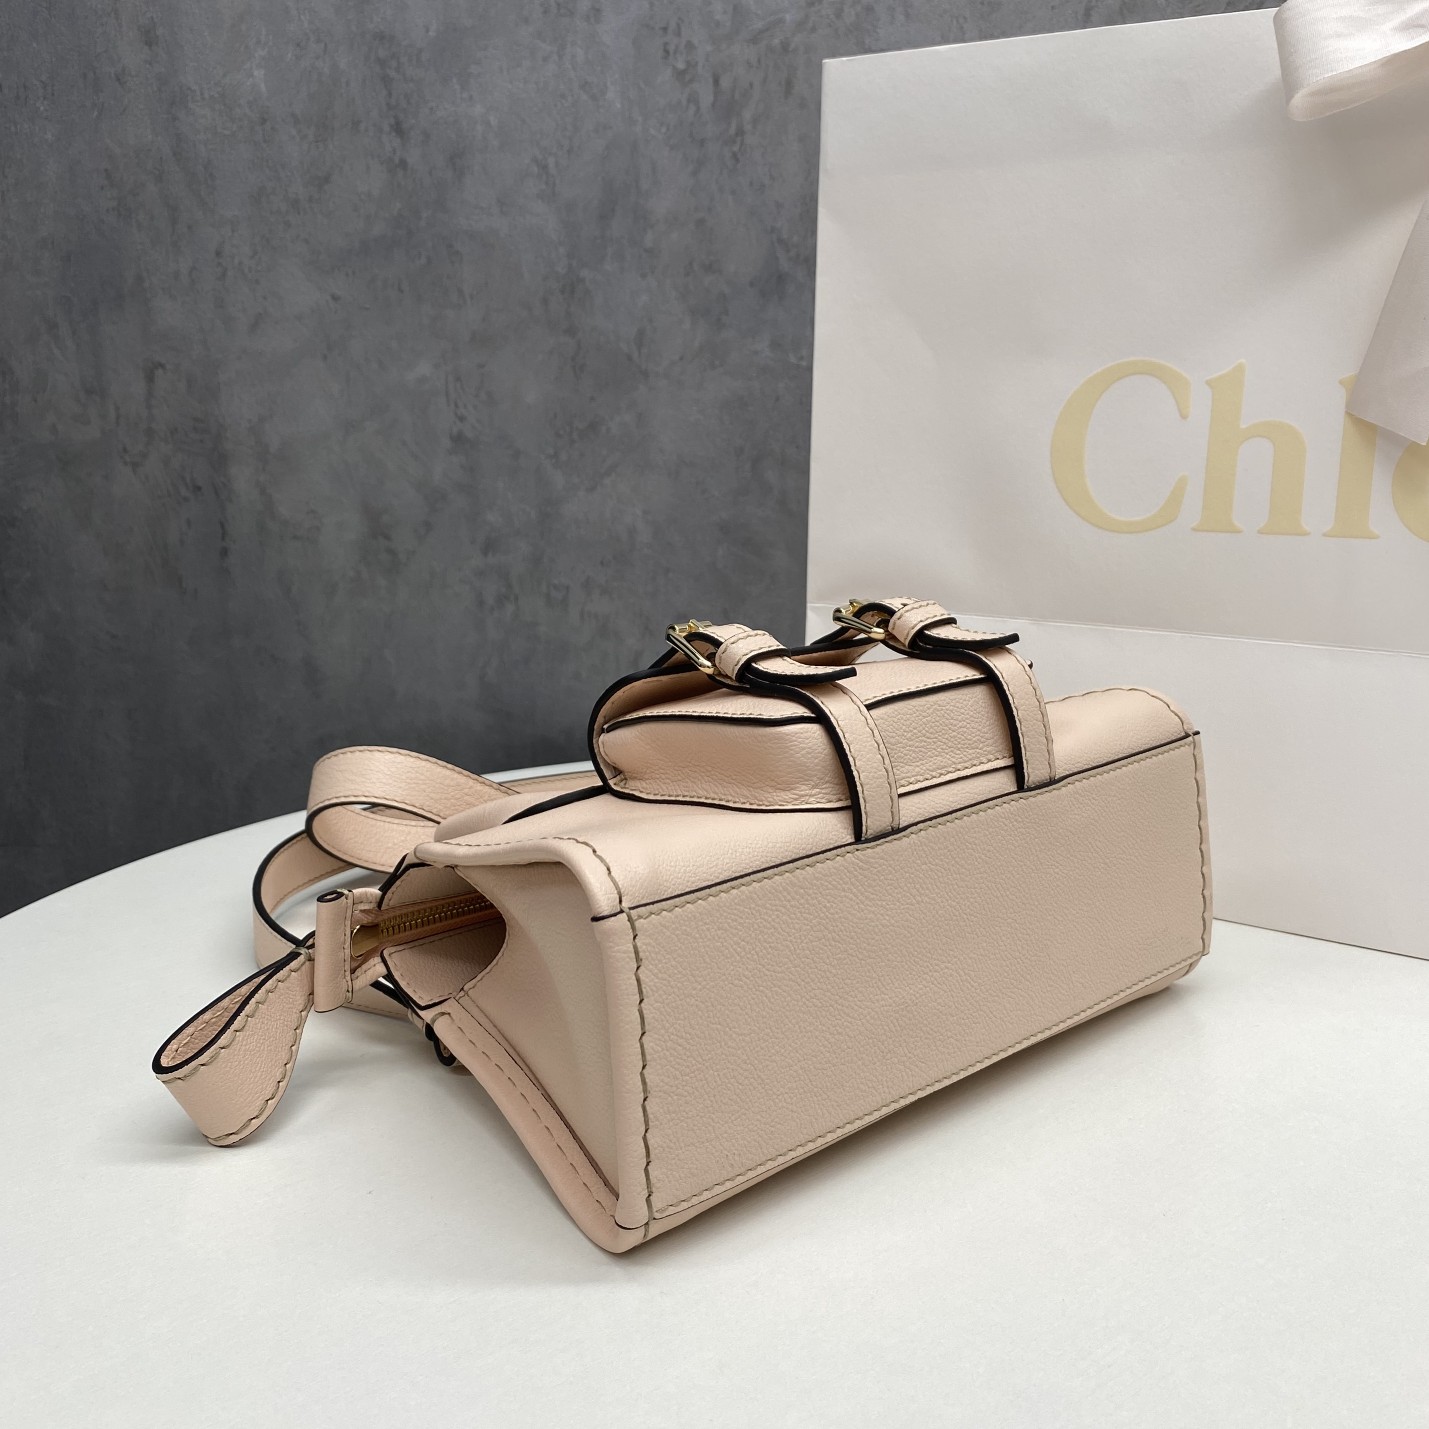 【P1500】克洛依女包货源 Chloe秋冬新款包包27455粉色真皮手提包